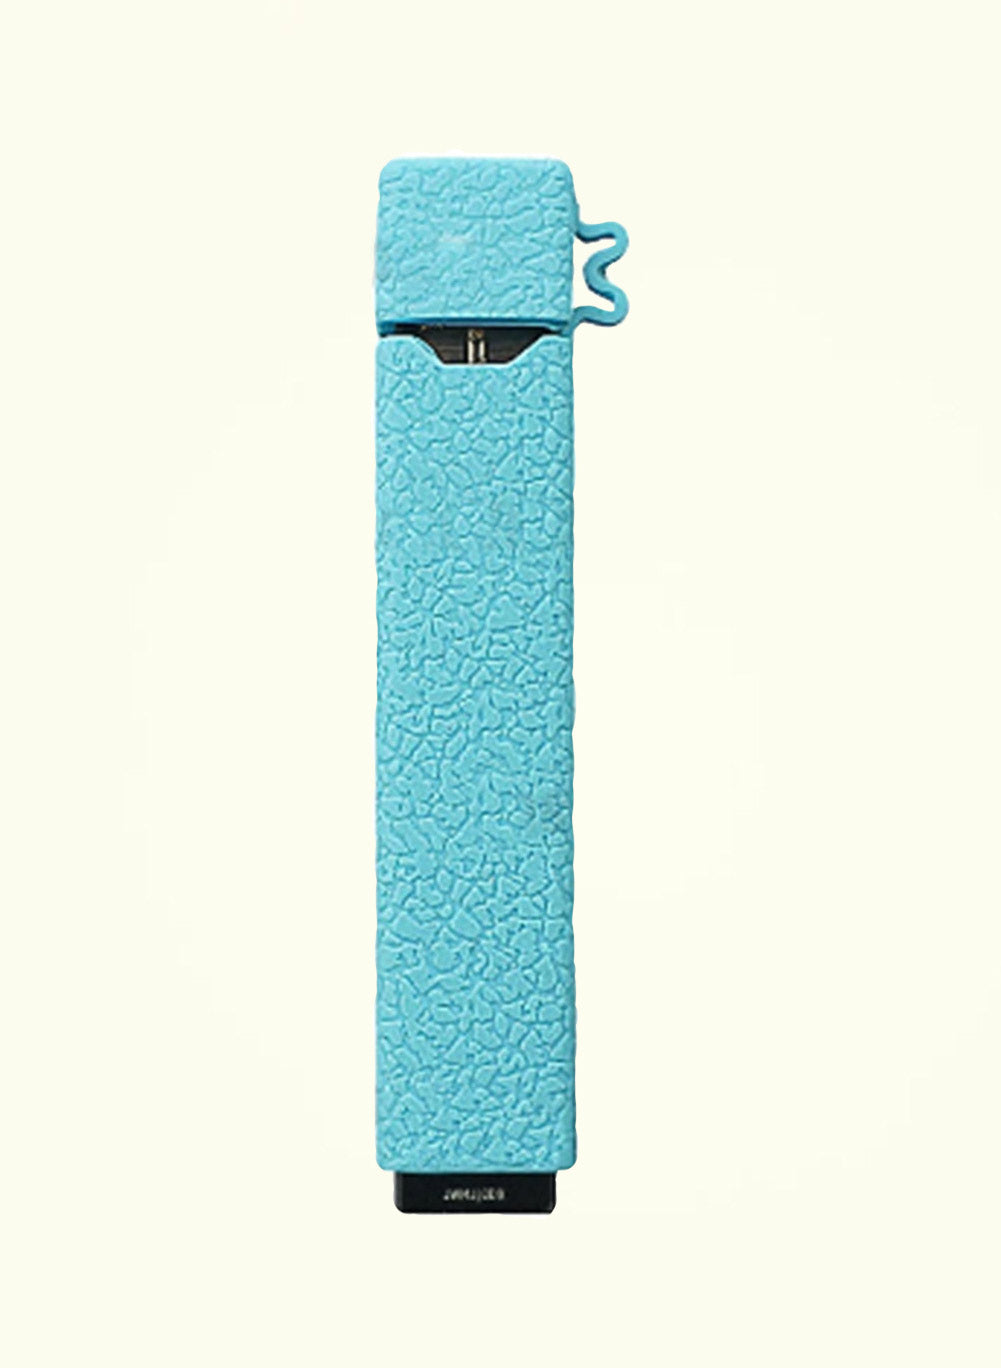 Soft Silicone Case for Juul Vape Pen, Anti Slip Sleeve Cover fits Juul Vapor